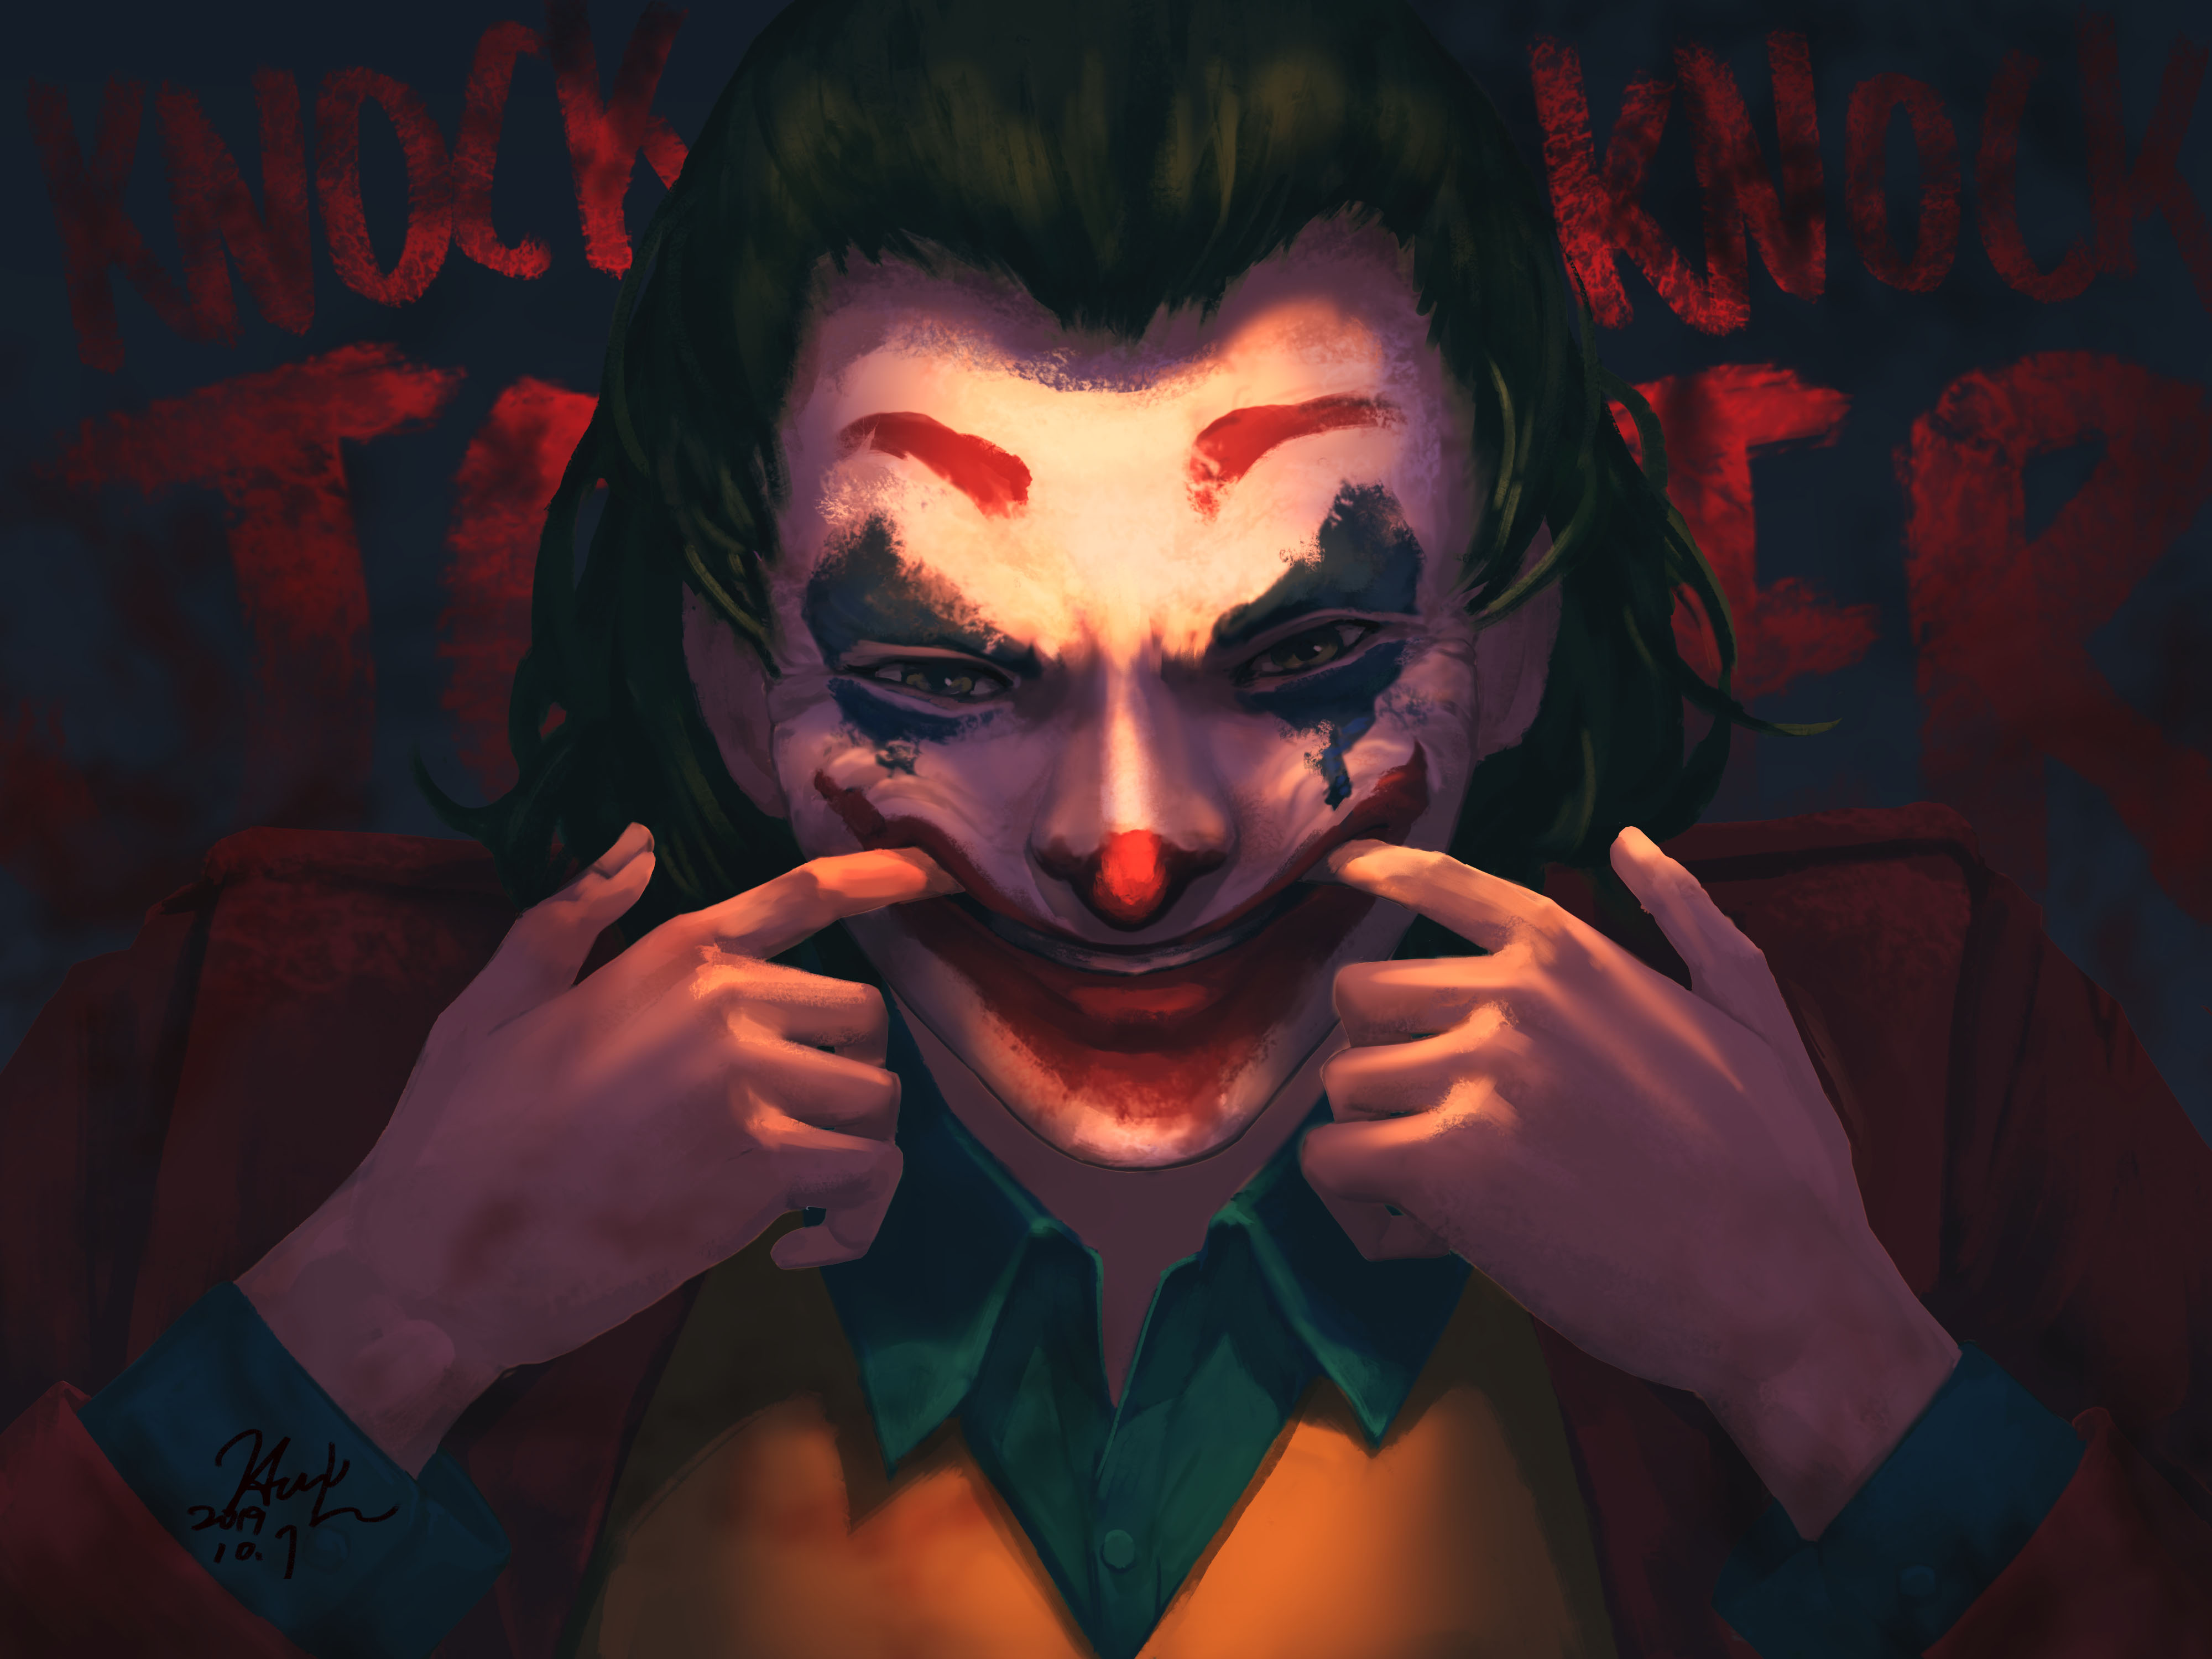 Joker Devil Smile Laptop Full HD 1080P HD 4k Wallpaper, Image, Background, Photo and Picture